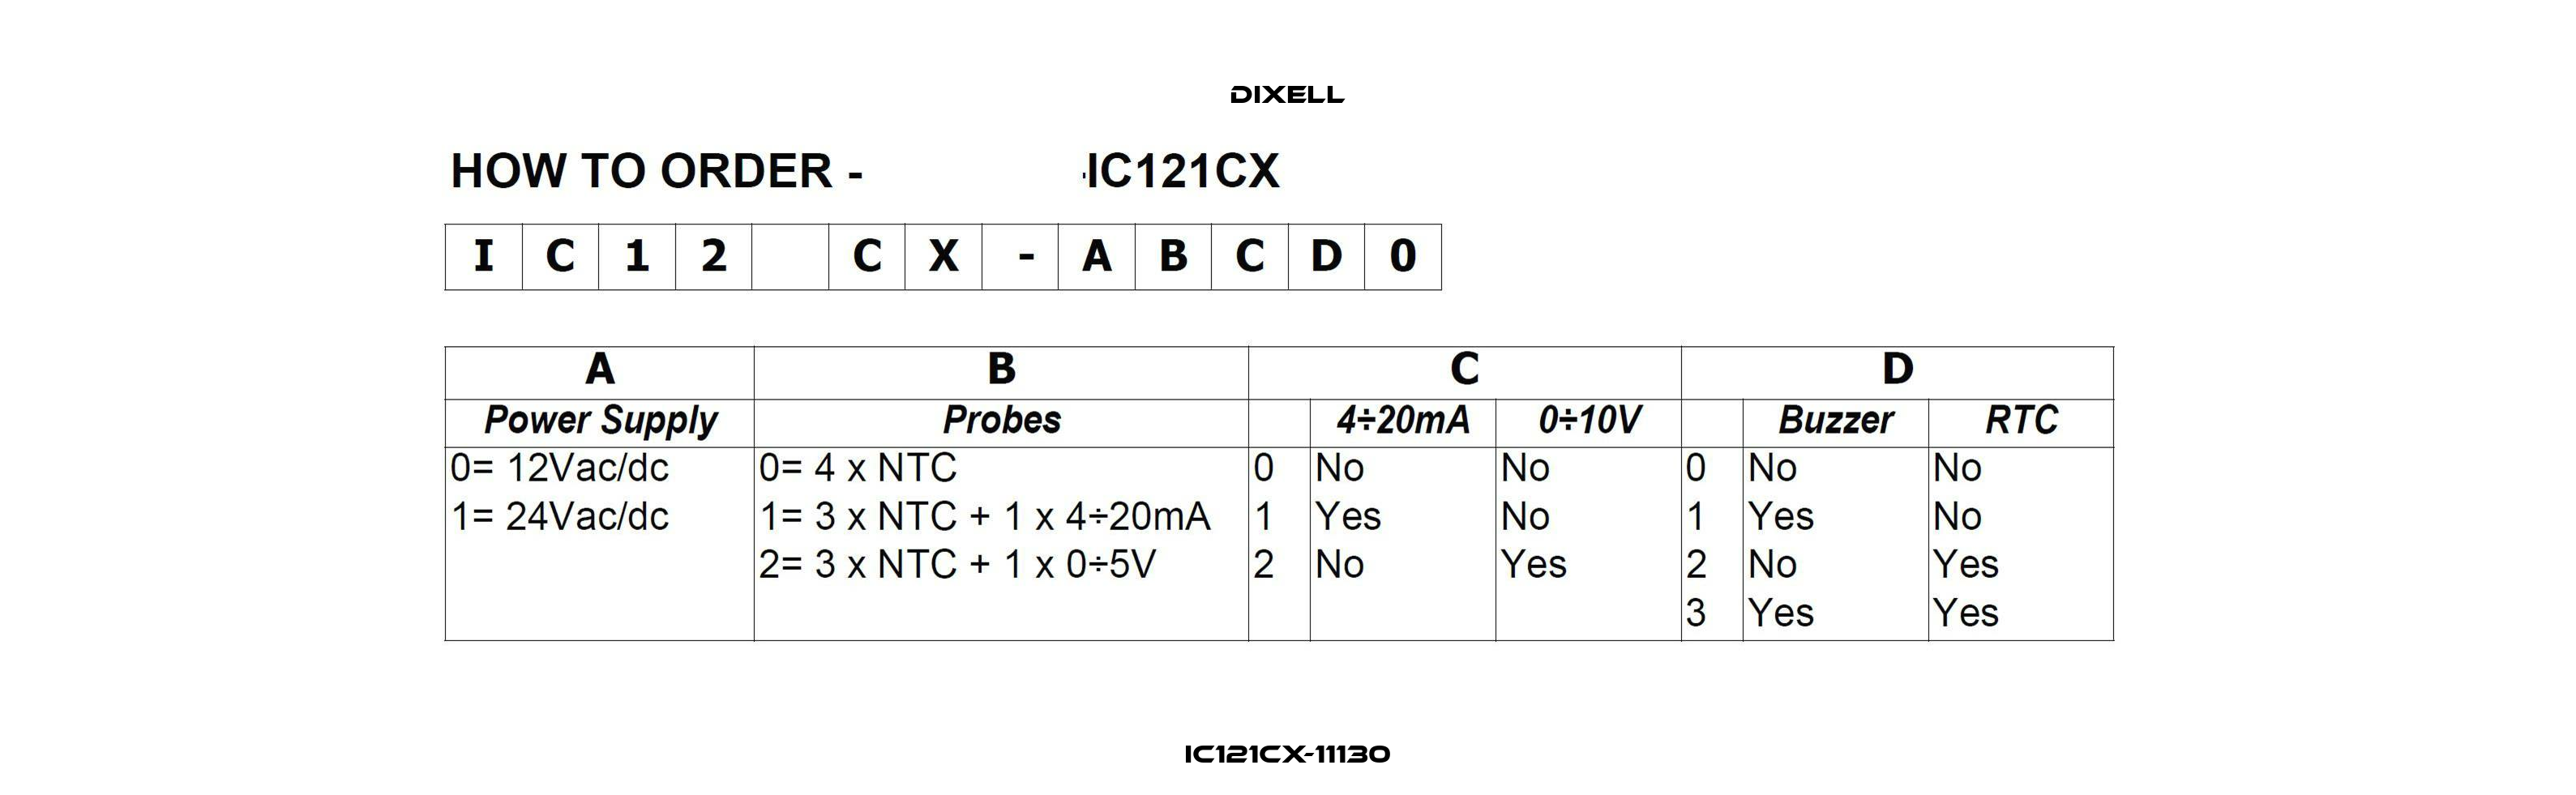 IC121CX-11130 Dixell